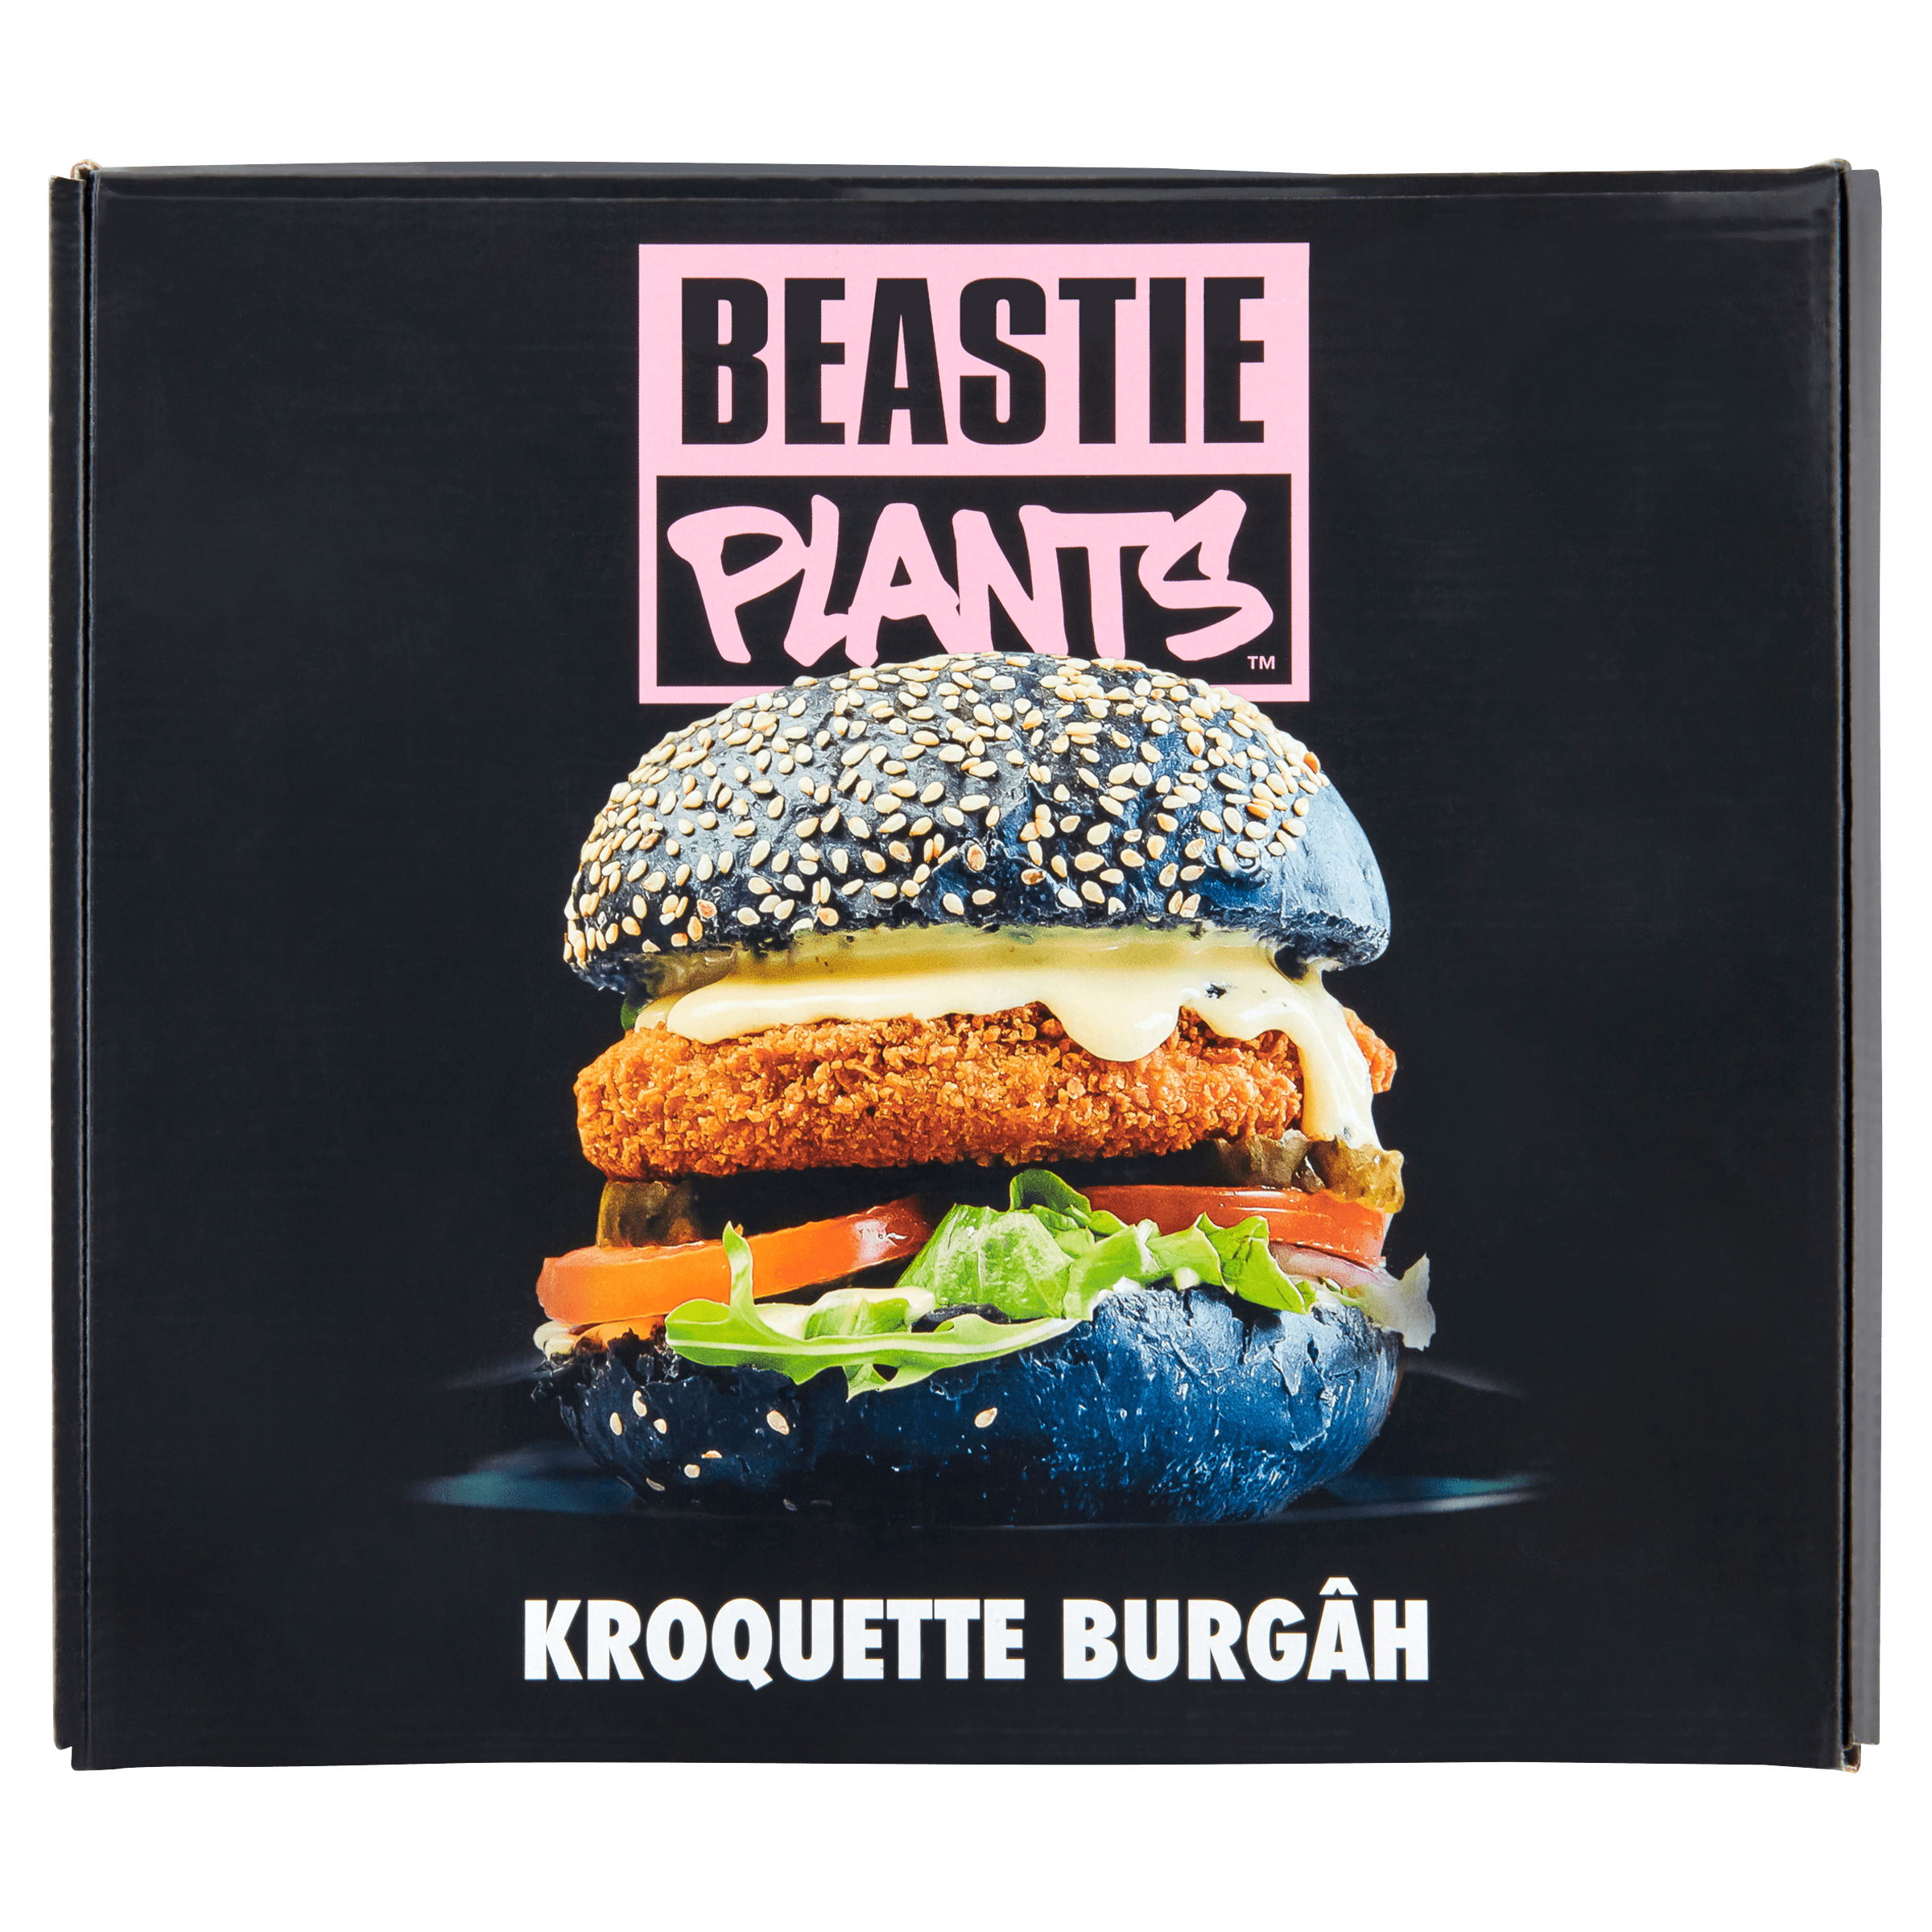 Beastie Plants - Kroquette Burgâh